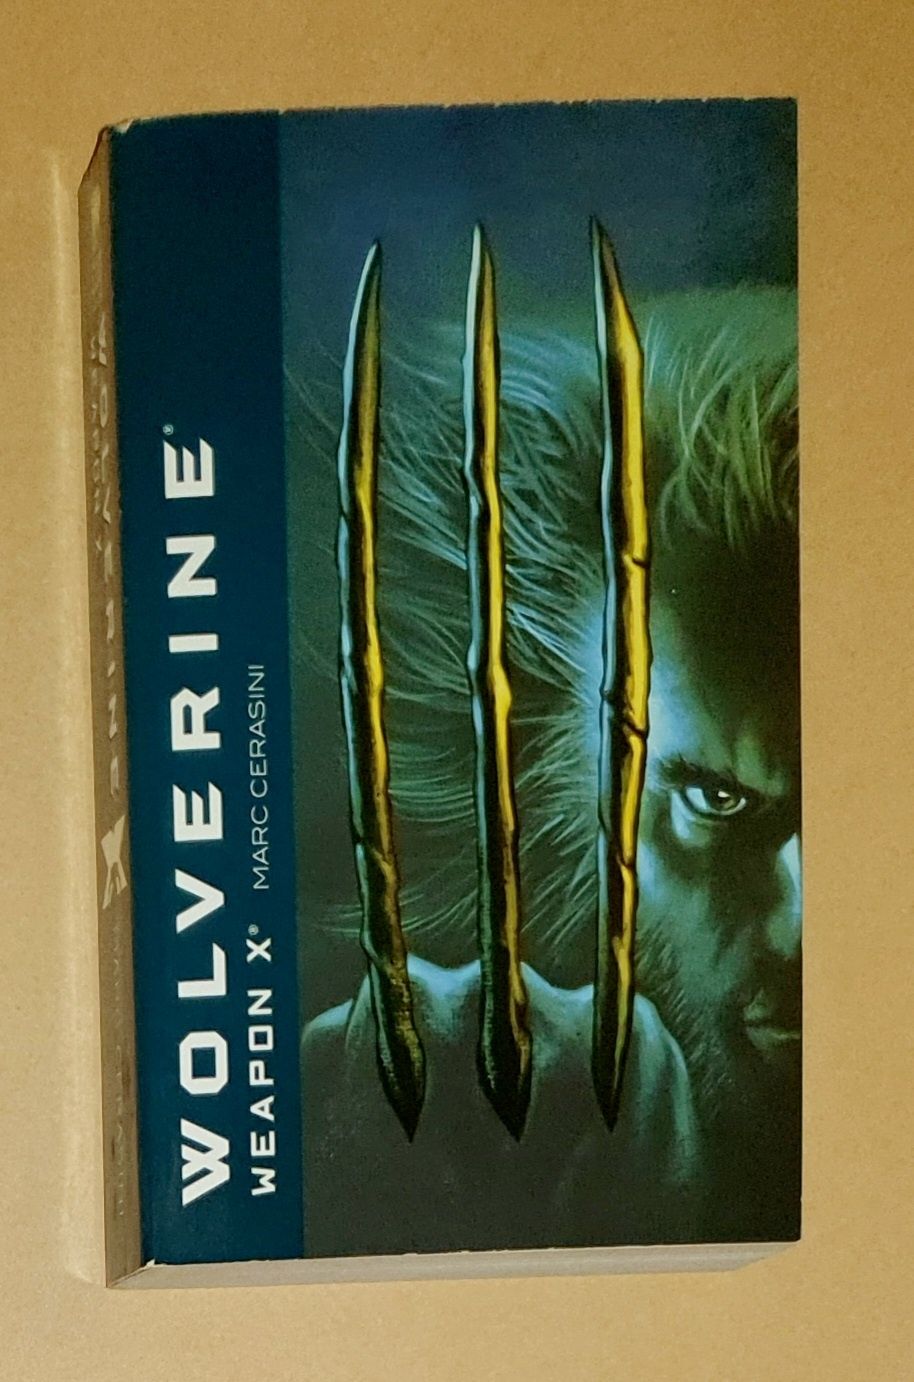 Wolverine Weapon X prose novel